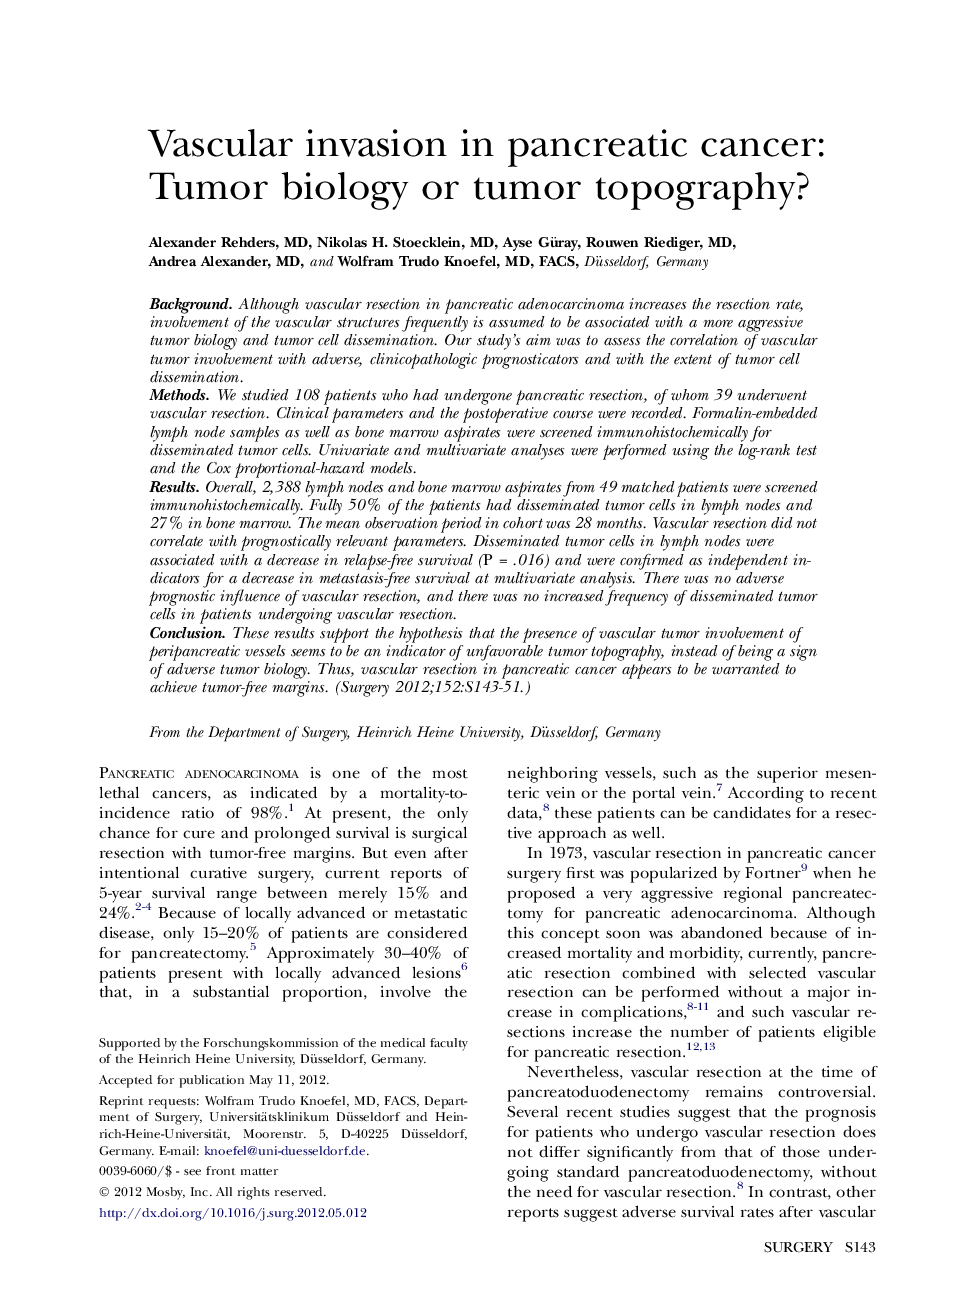 Vascular invasion in pancreatic cancer: Tumor biology or tumor topography? 